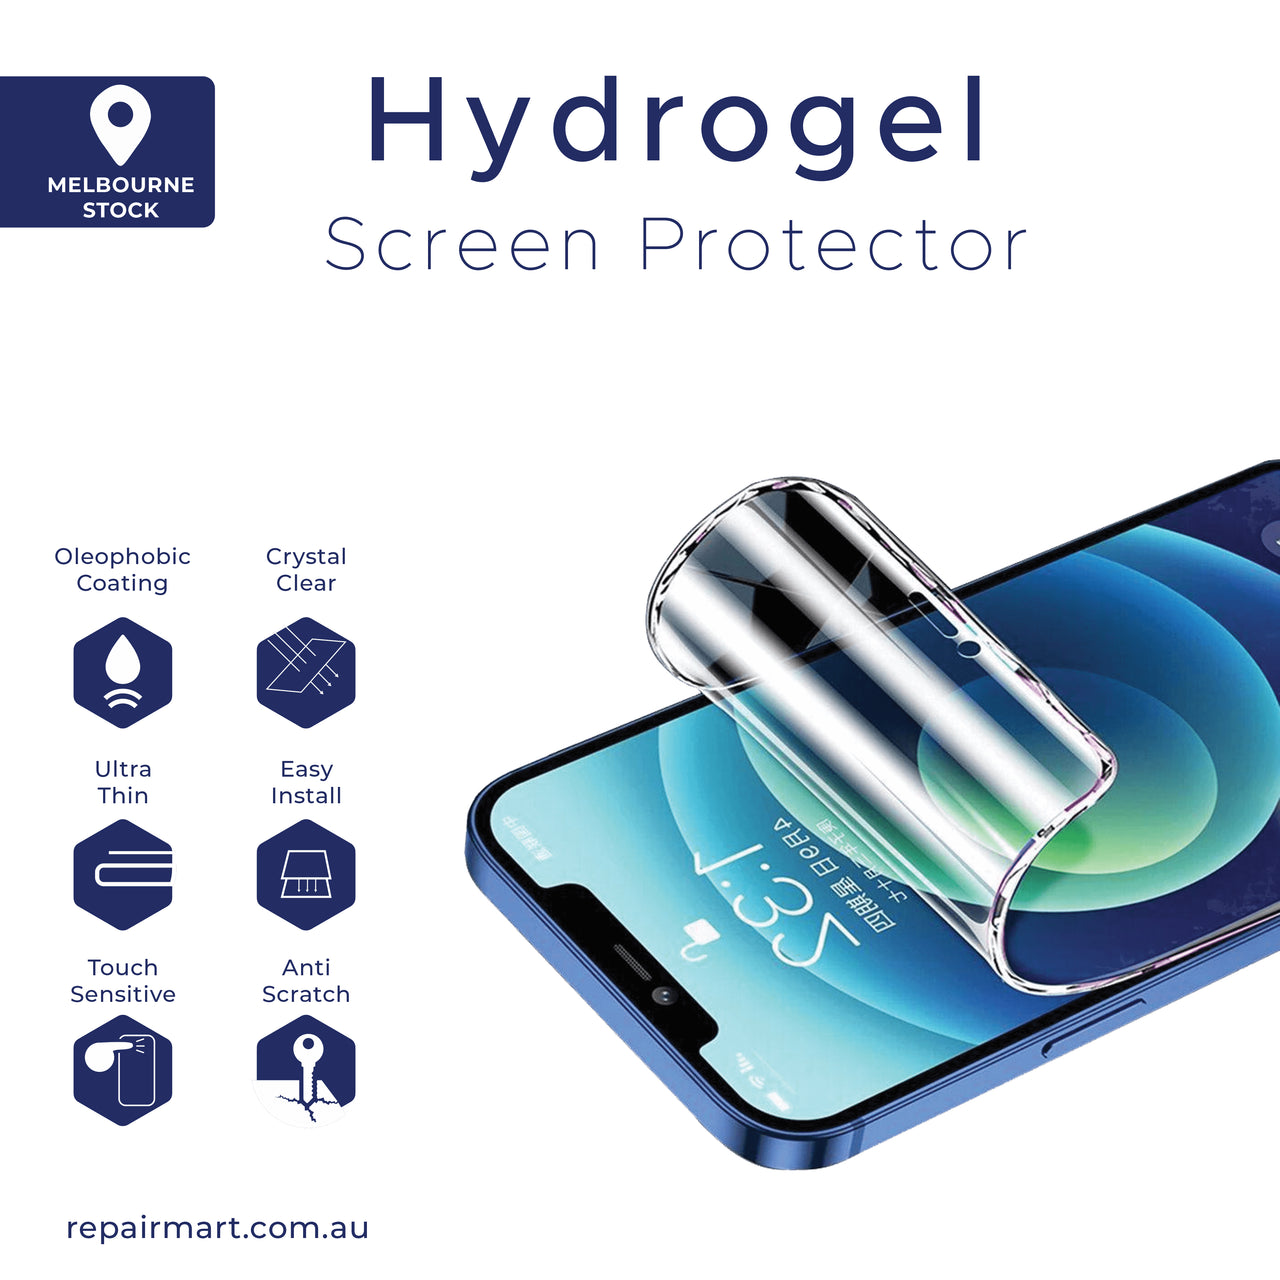 Motorola Edge 20 Pro (Motorola Edge S Pro) Compatible Premium Hydrogel Screen Protector With Full Coverage Ultra HD